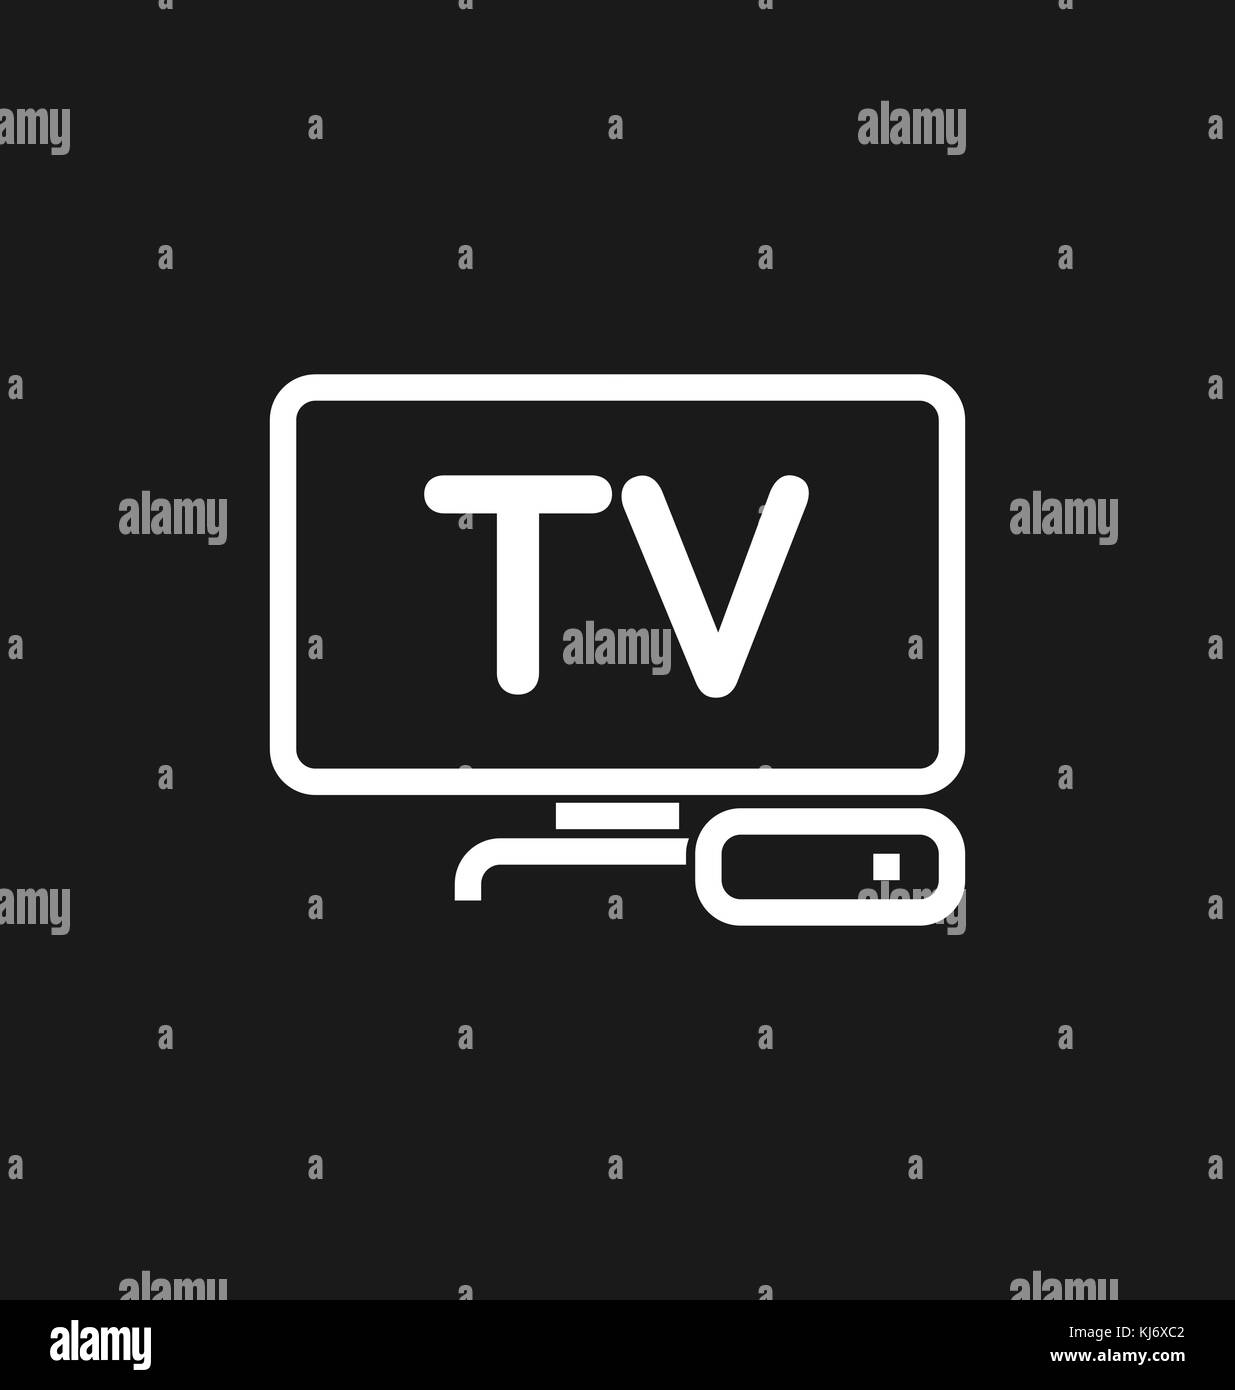 TV box / IPTV icon vector illustration. Stock Vector